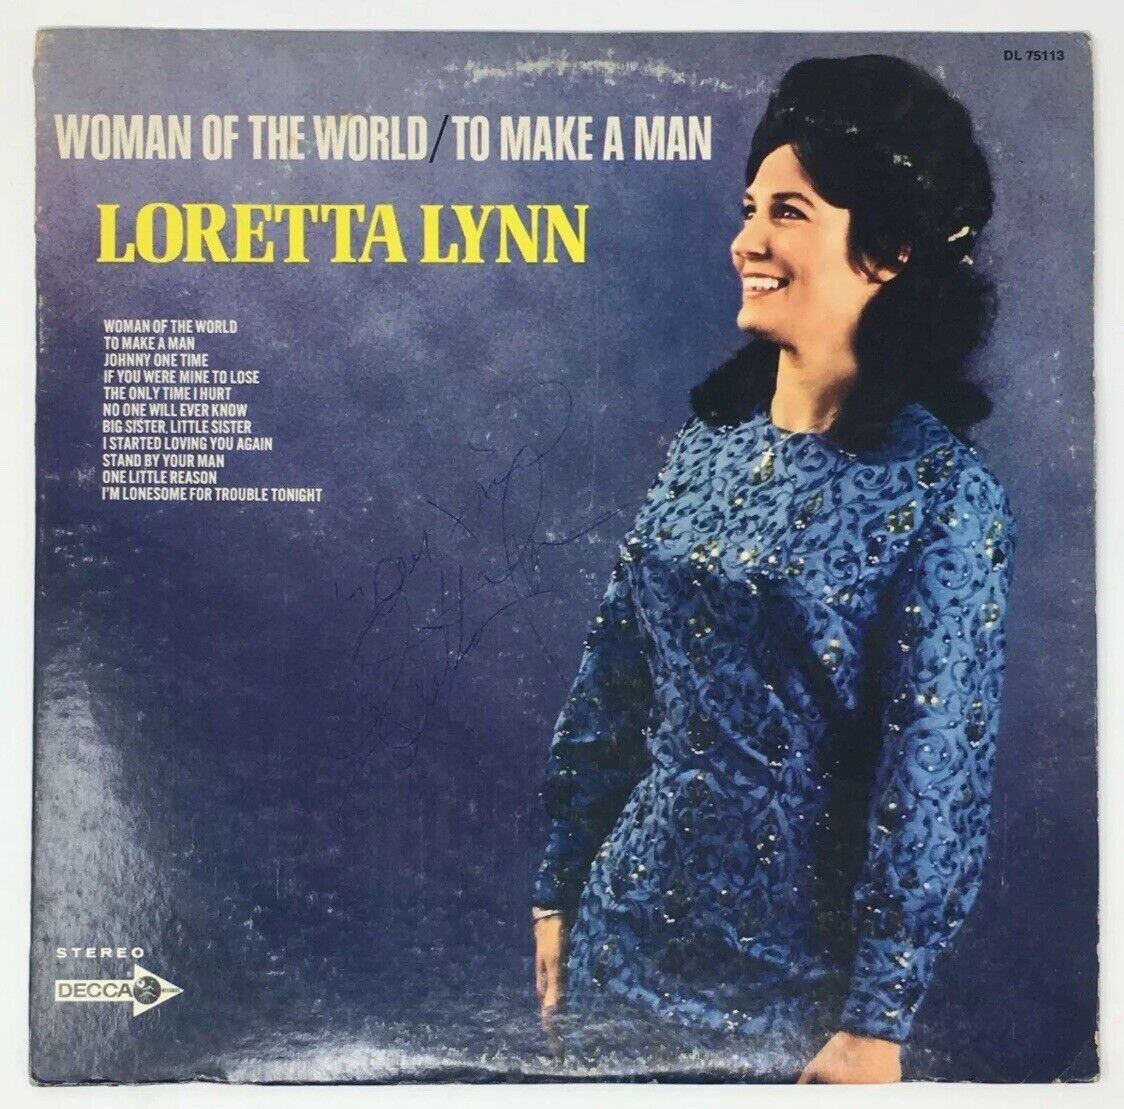 LORETTA LYNN “Woman Of The World” SIGNED Autograph Vinyl Record Album LP JSA COA